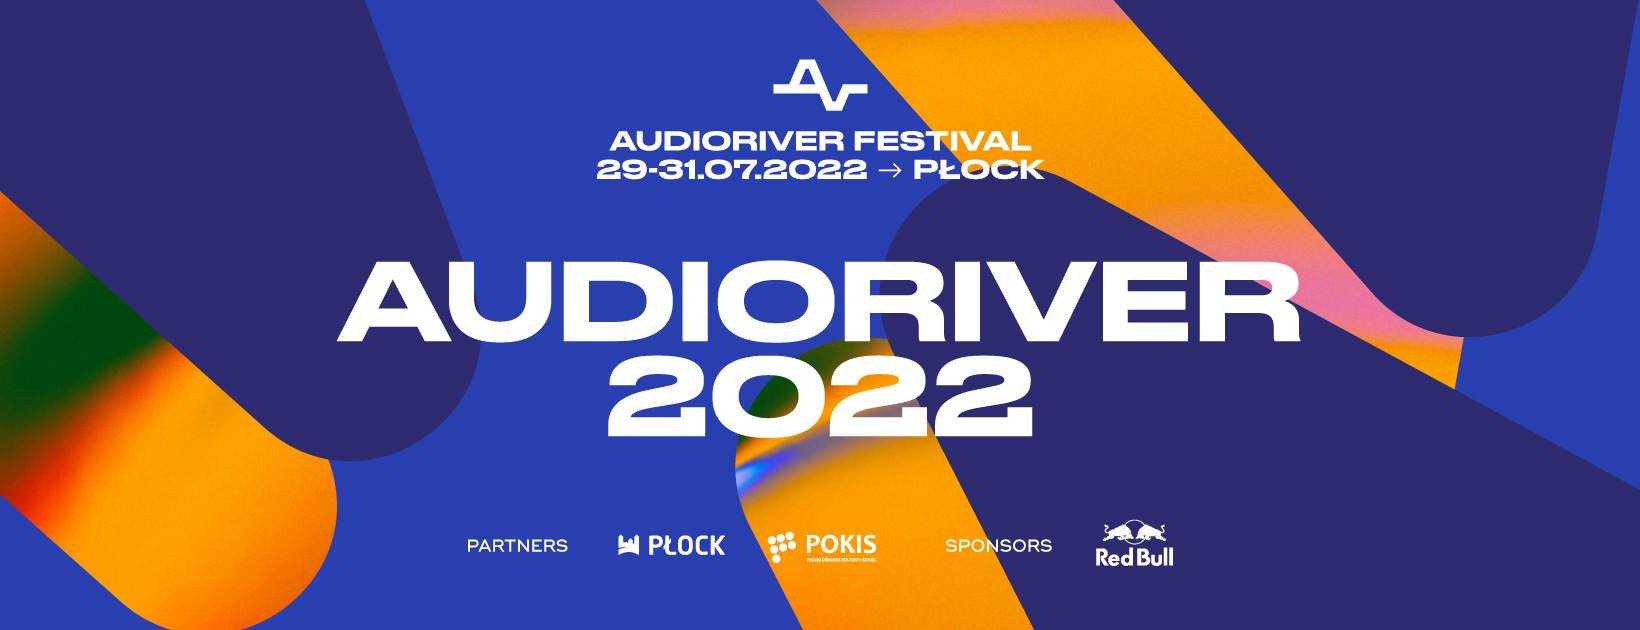 Audioriver 2022 - Página frontal